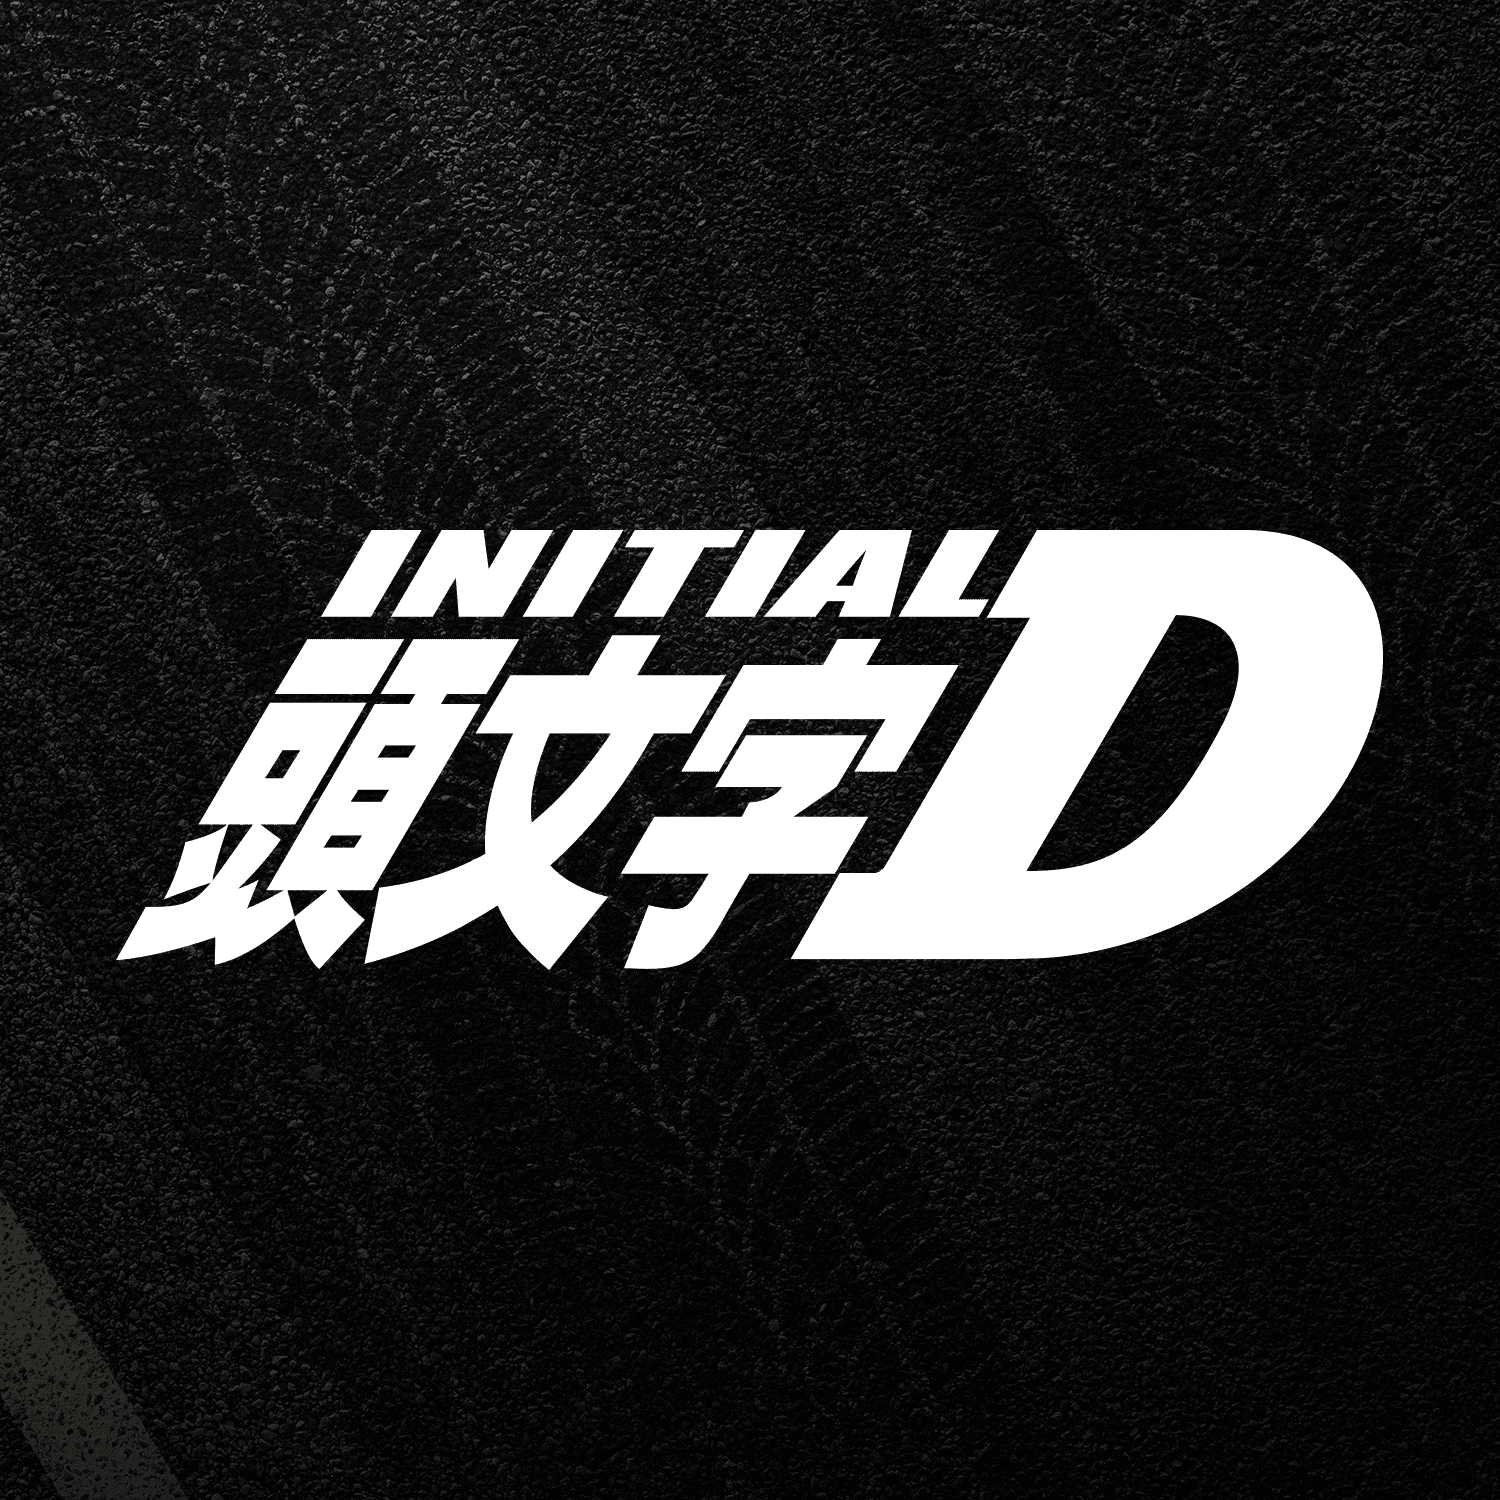 Japanese Black and White Logo - INITIAL D Sticker JDM Logo Decal Japanese Decal Drift Car Vinyl | eBay